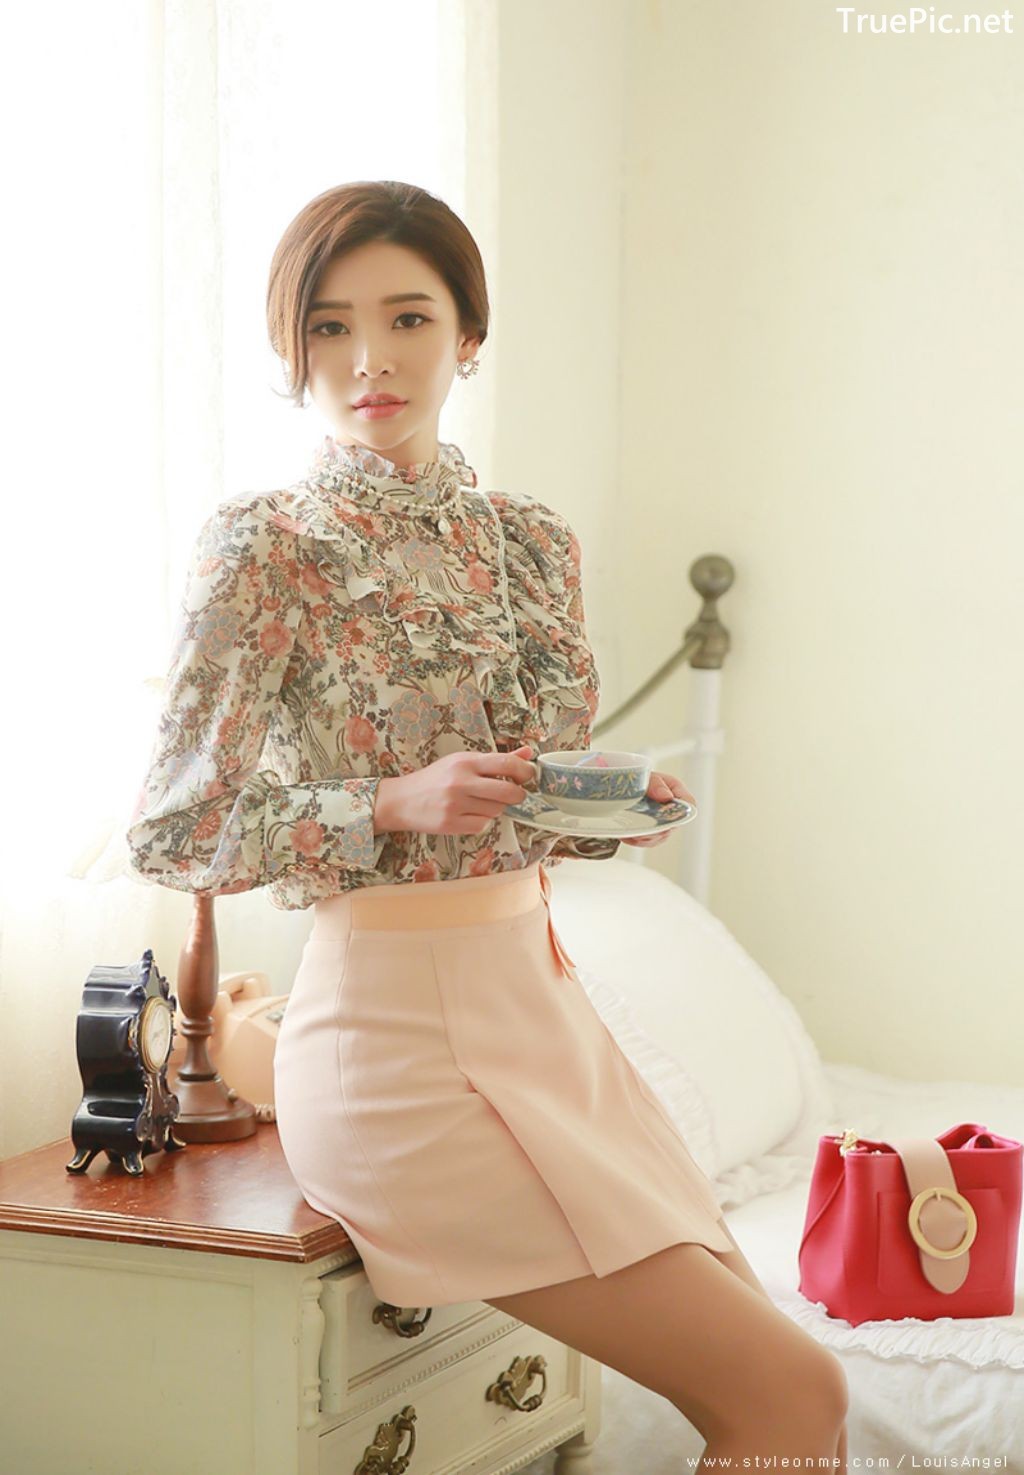 Image-Korean-Fashion-Model-Park-Da-Hyun-Office-Dress-Collection-TruePic.net- Picture-29